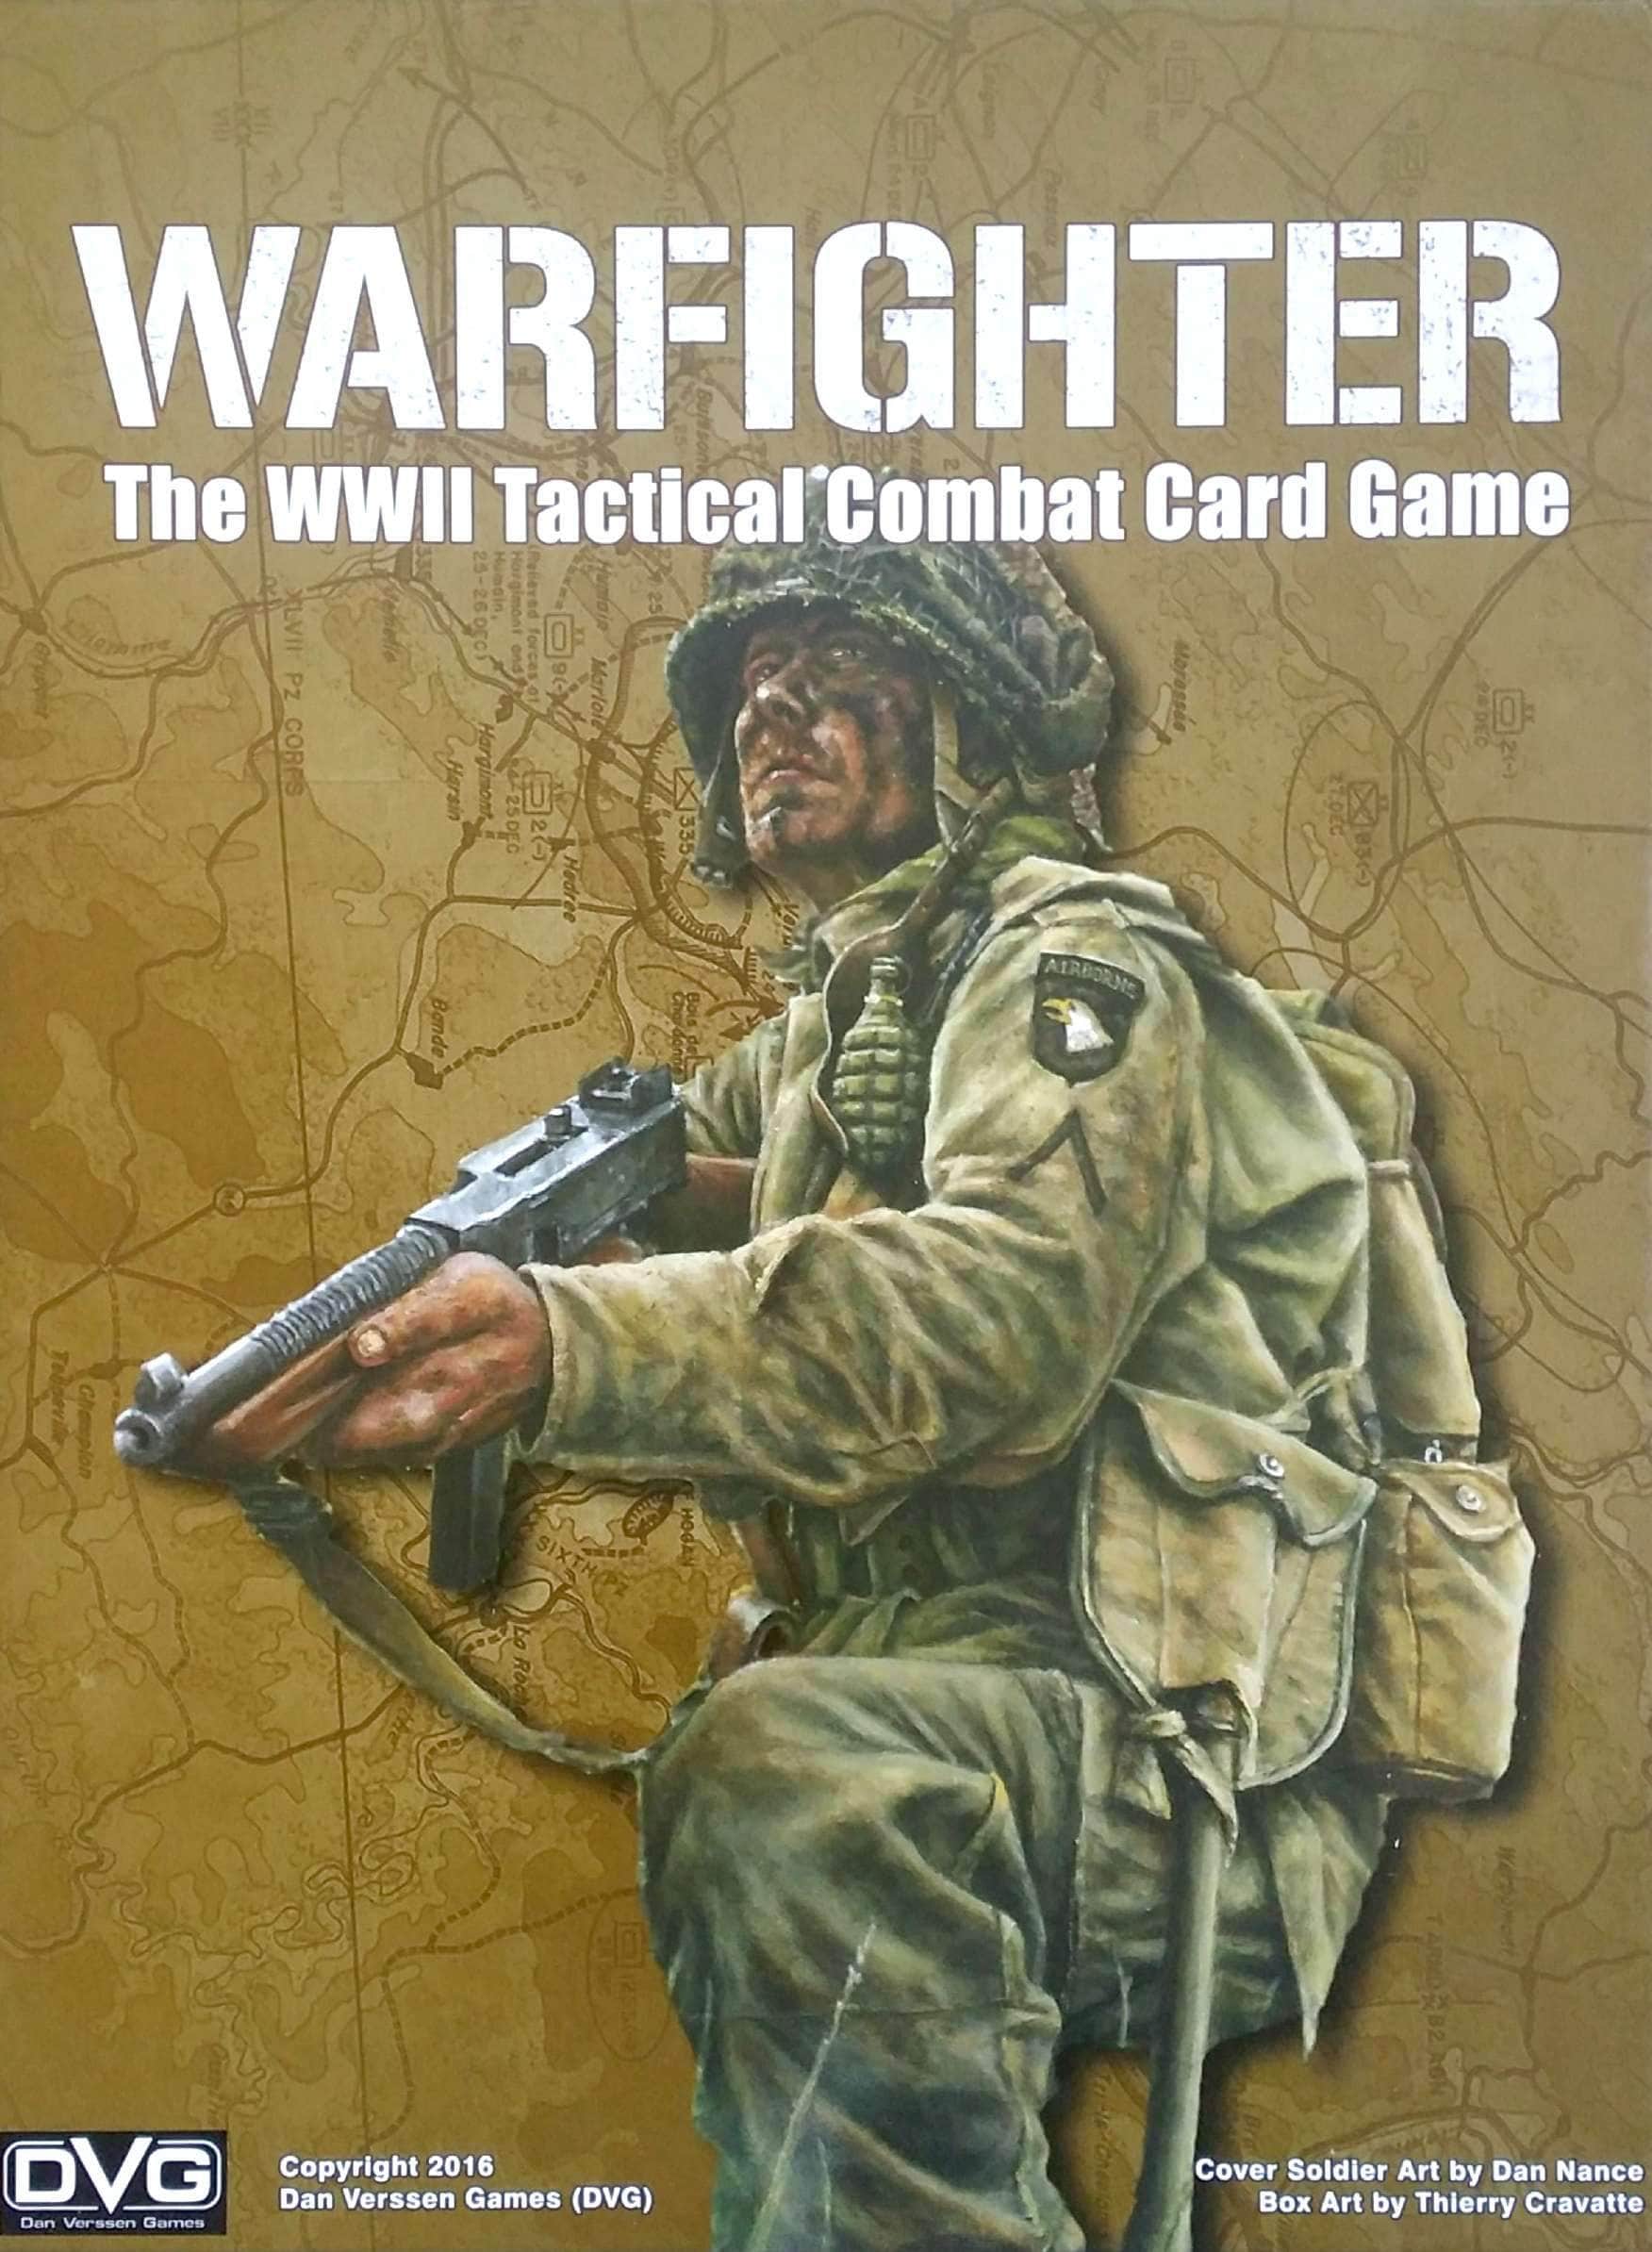 Warfighter: Das Taktische Kampfkartenspiel (Kickstarter Special) Kickstarter -Brettspiel Dan Verssen Games (DVG) KS800196a